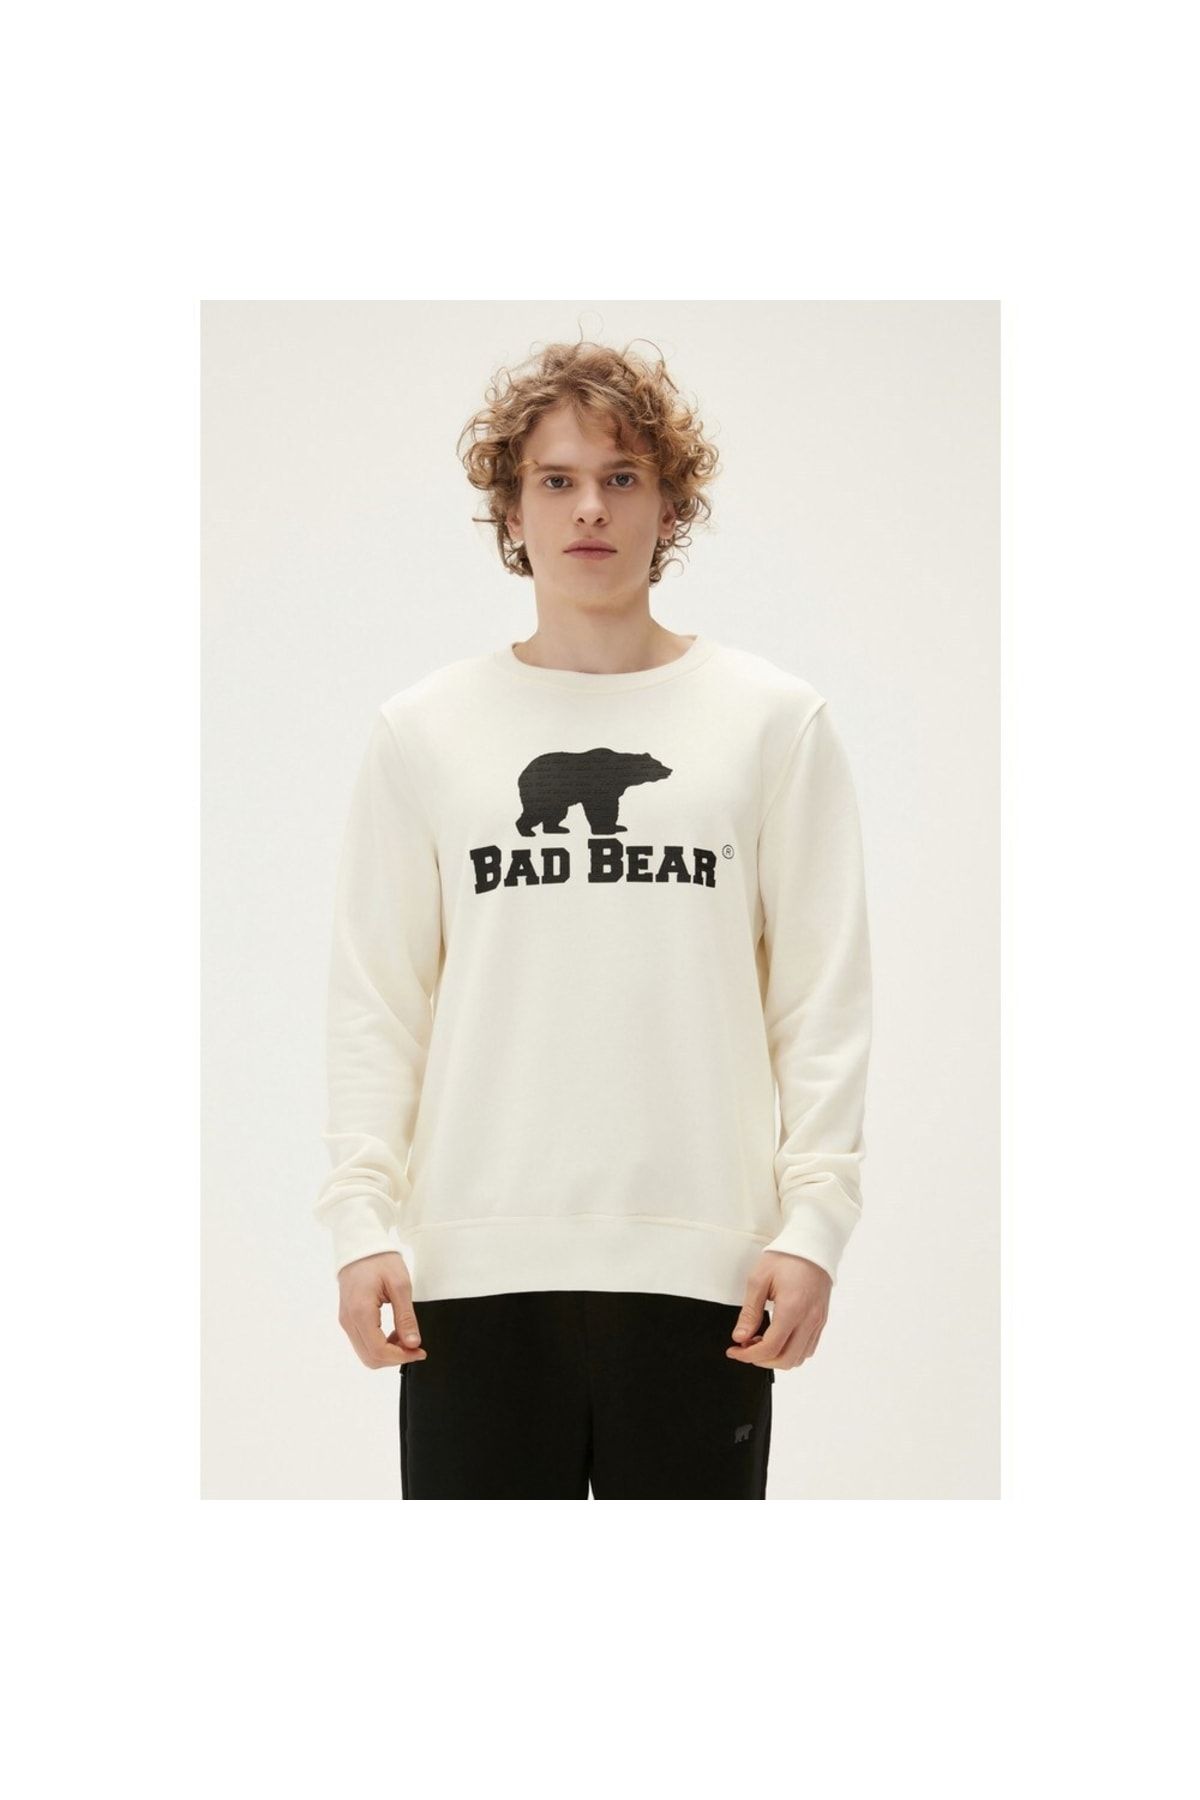 Bad Bear Logo Crewneck Hoodıe Erkek Krem Sweatshirt 22.02.12.007-c108